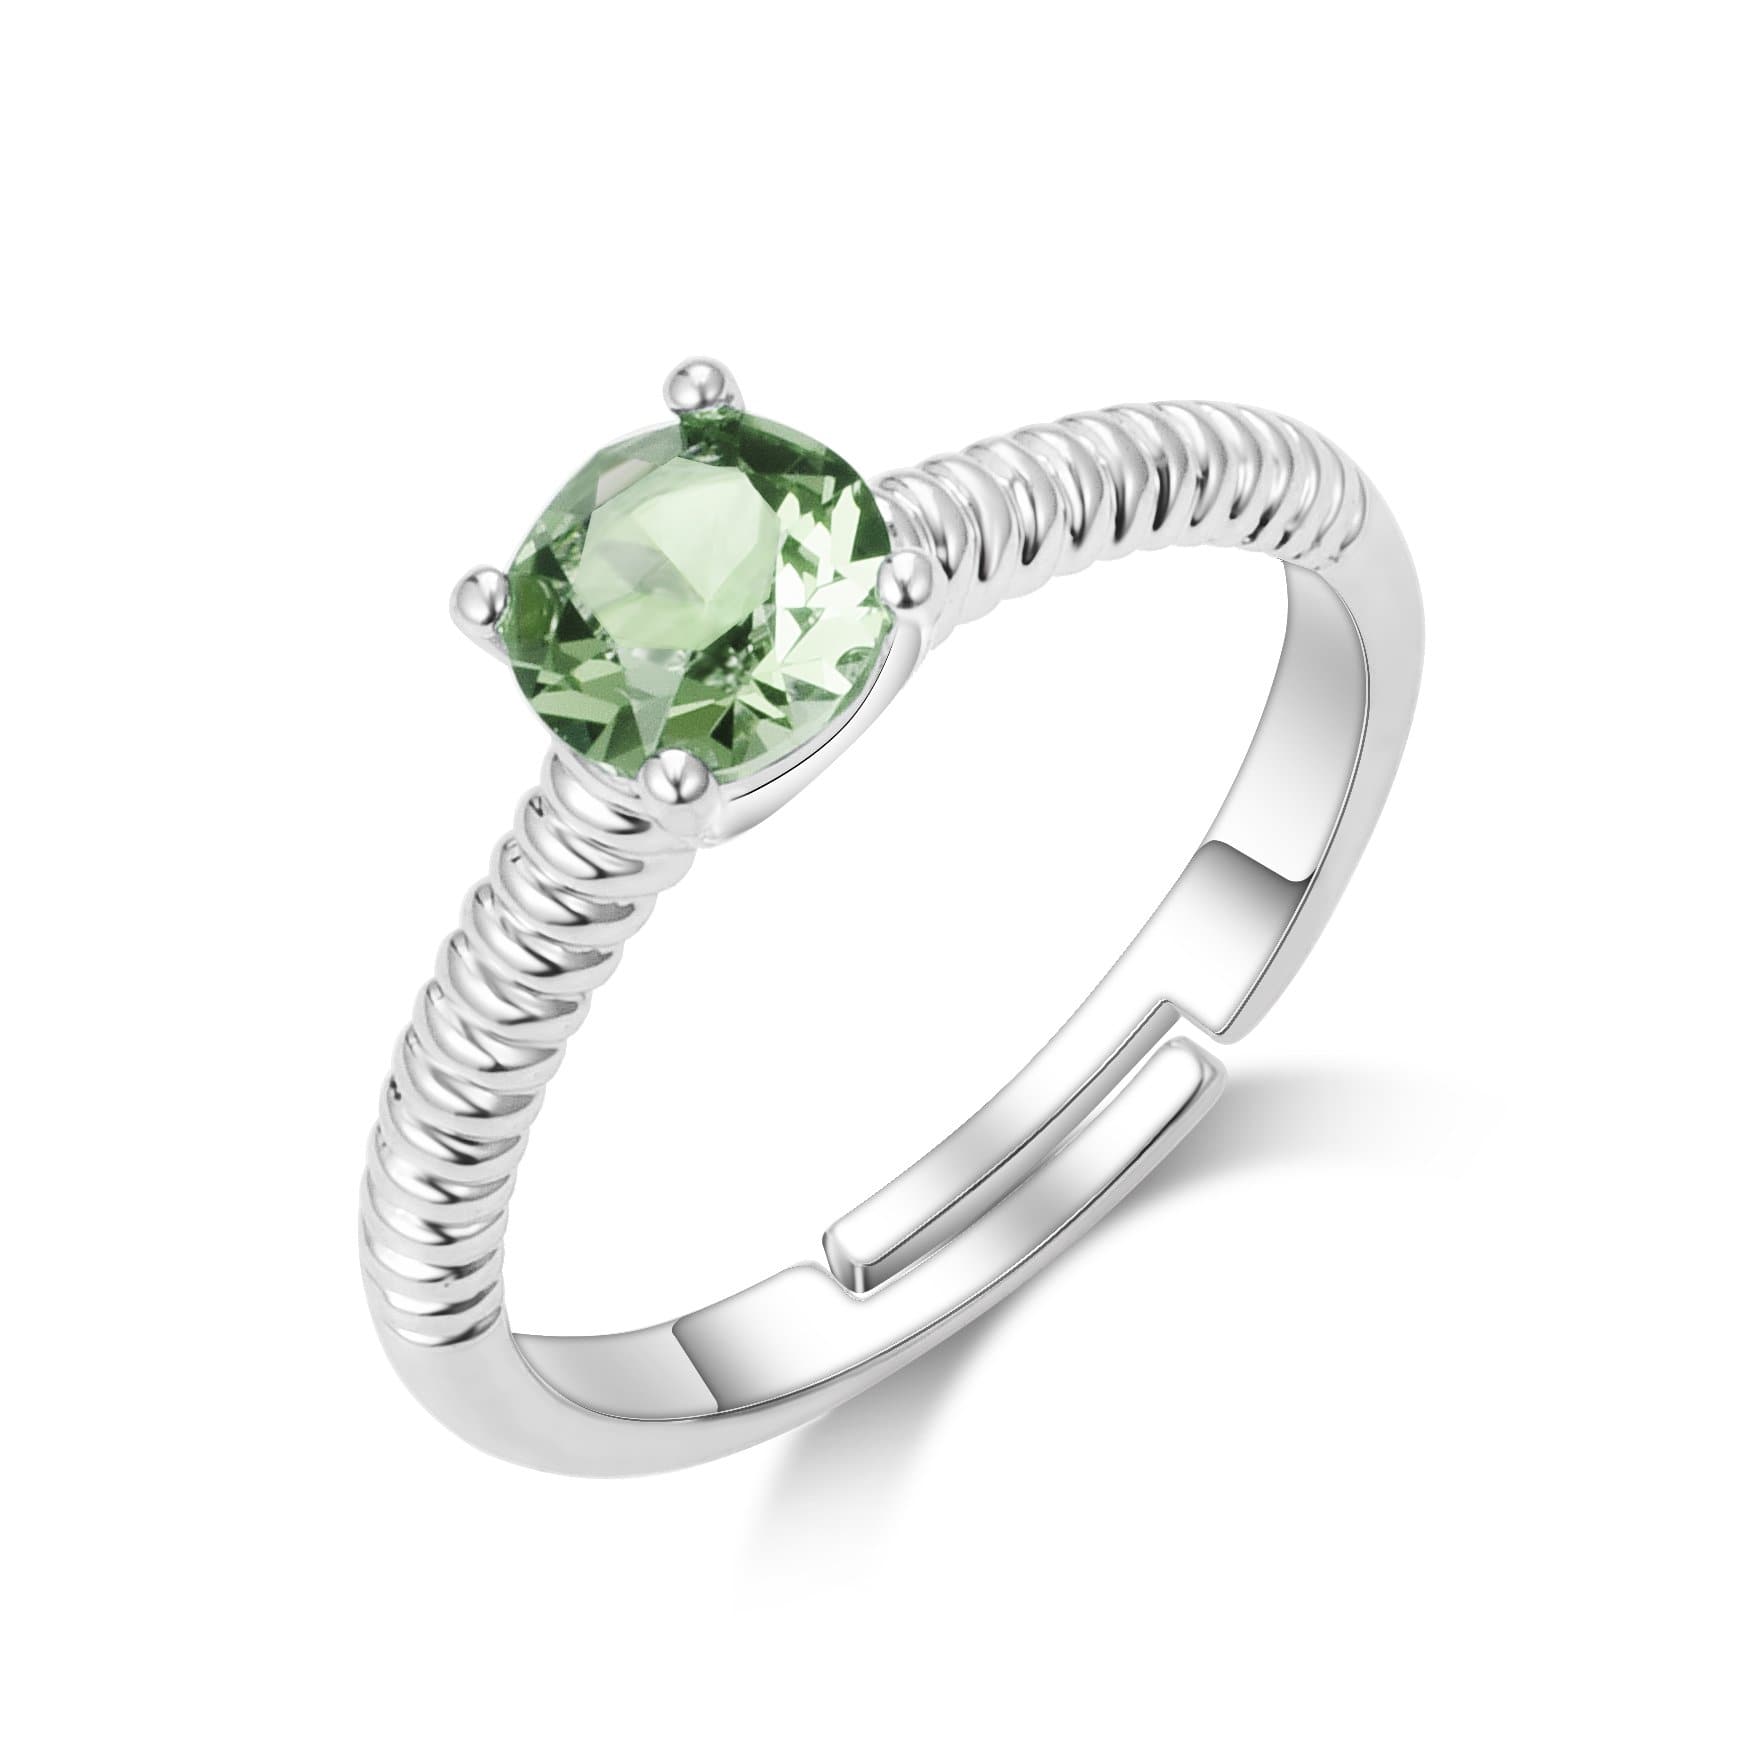 Light Green Adjustable Crystal Ring Created with Zircondia® Crystals by Philip Jones Jewellery